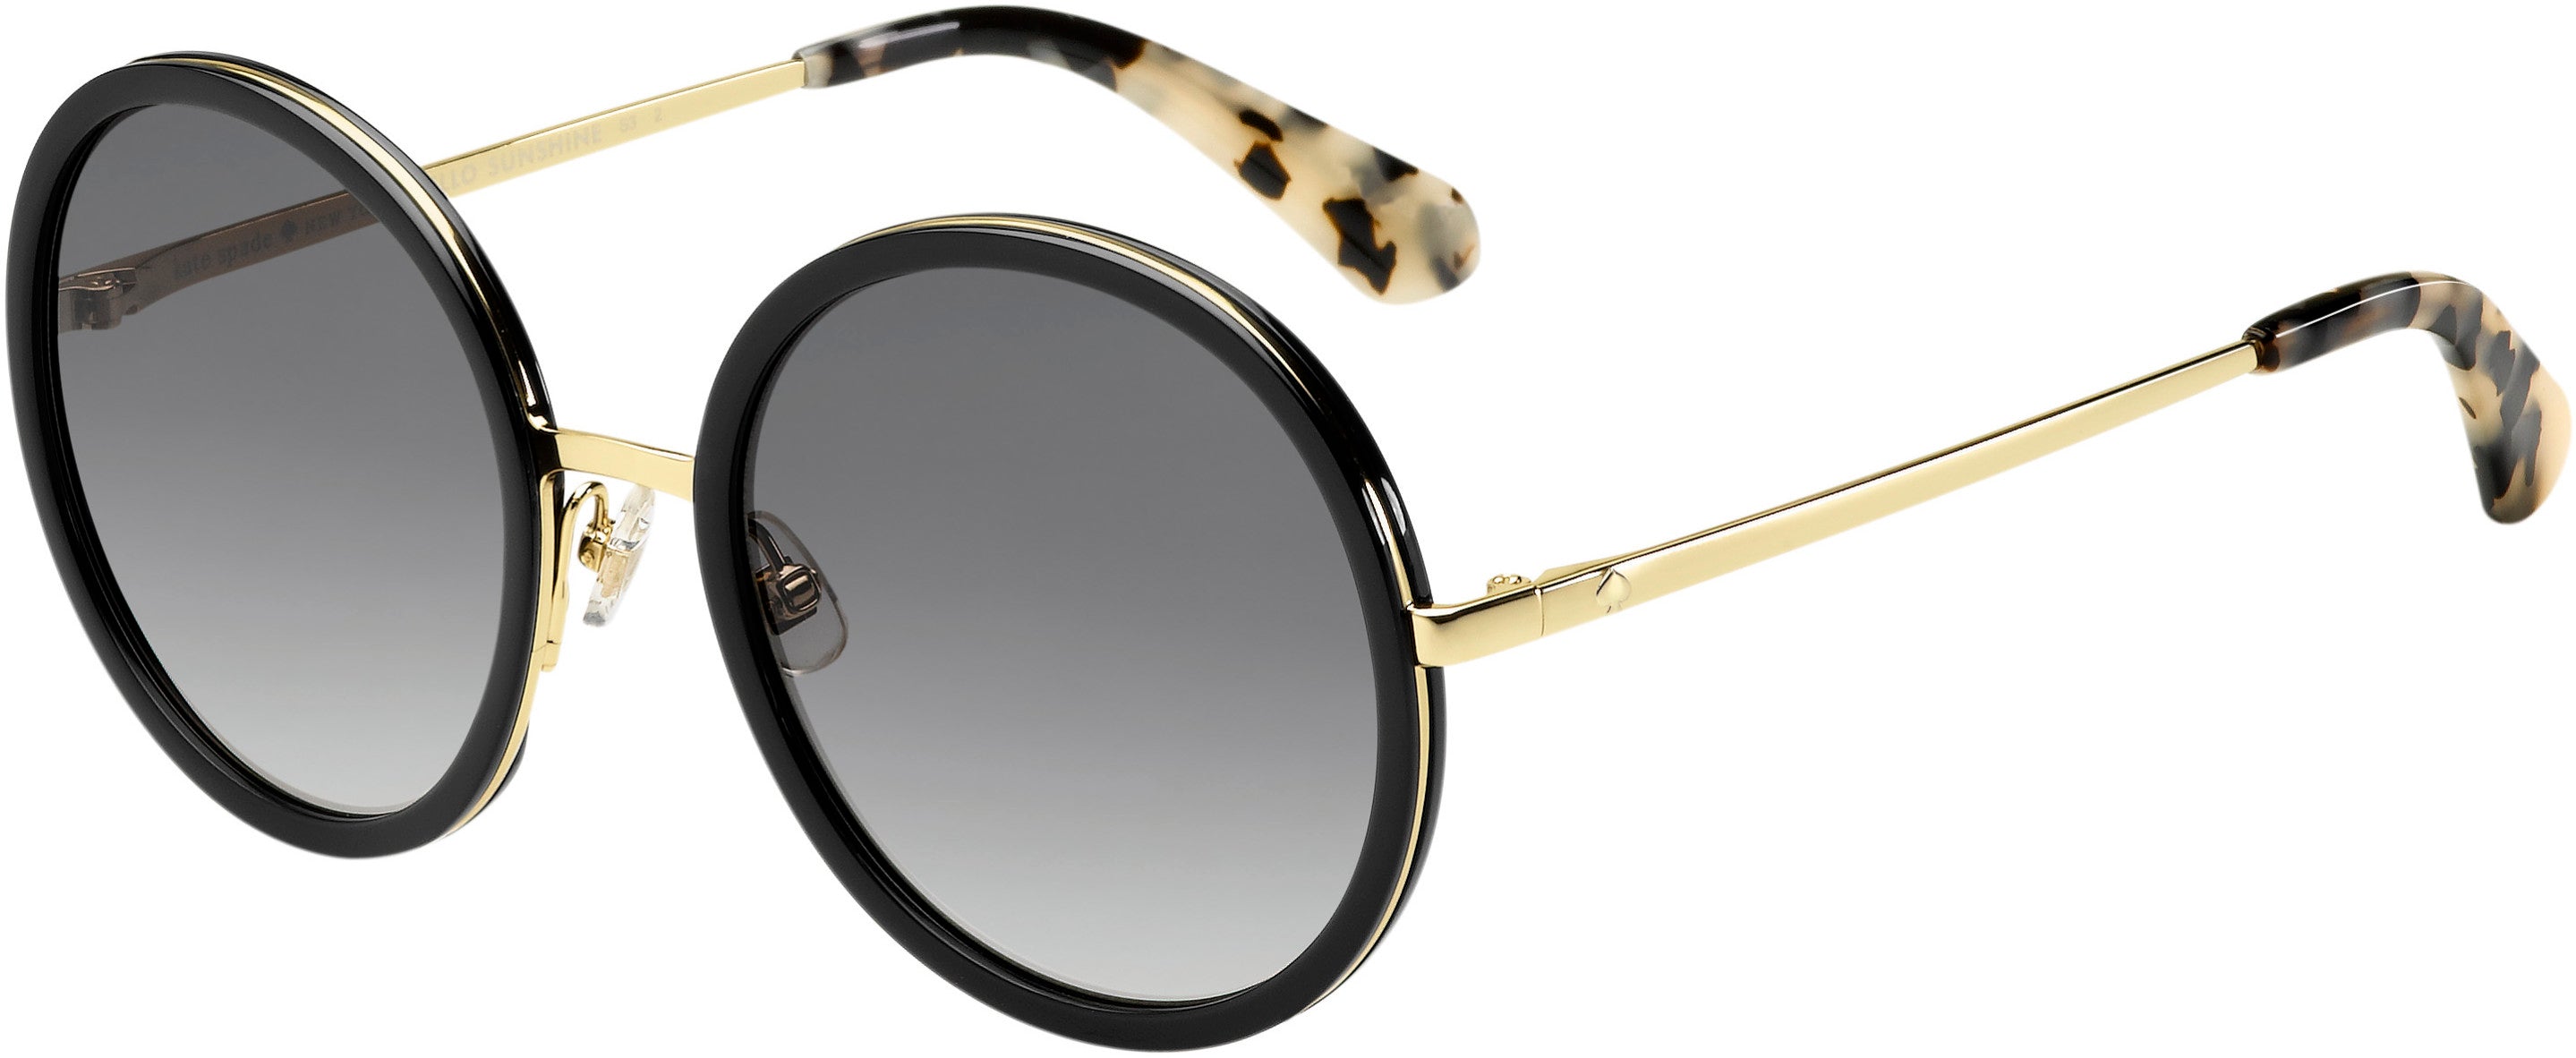 Kate Spade Lamonica/S Oval Modified Sunglasses 02M2-02M2  Black Gold (9O Dark Gray Gradient)